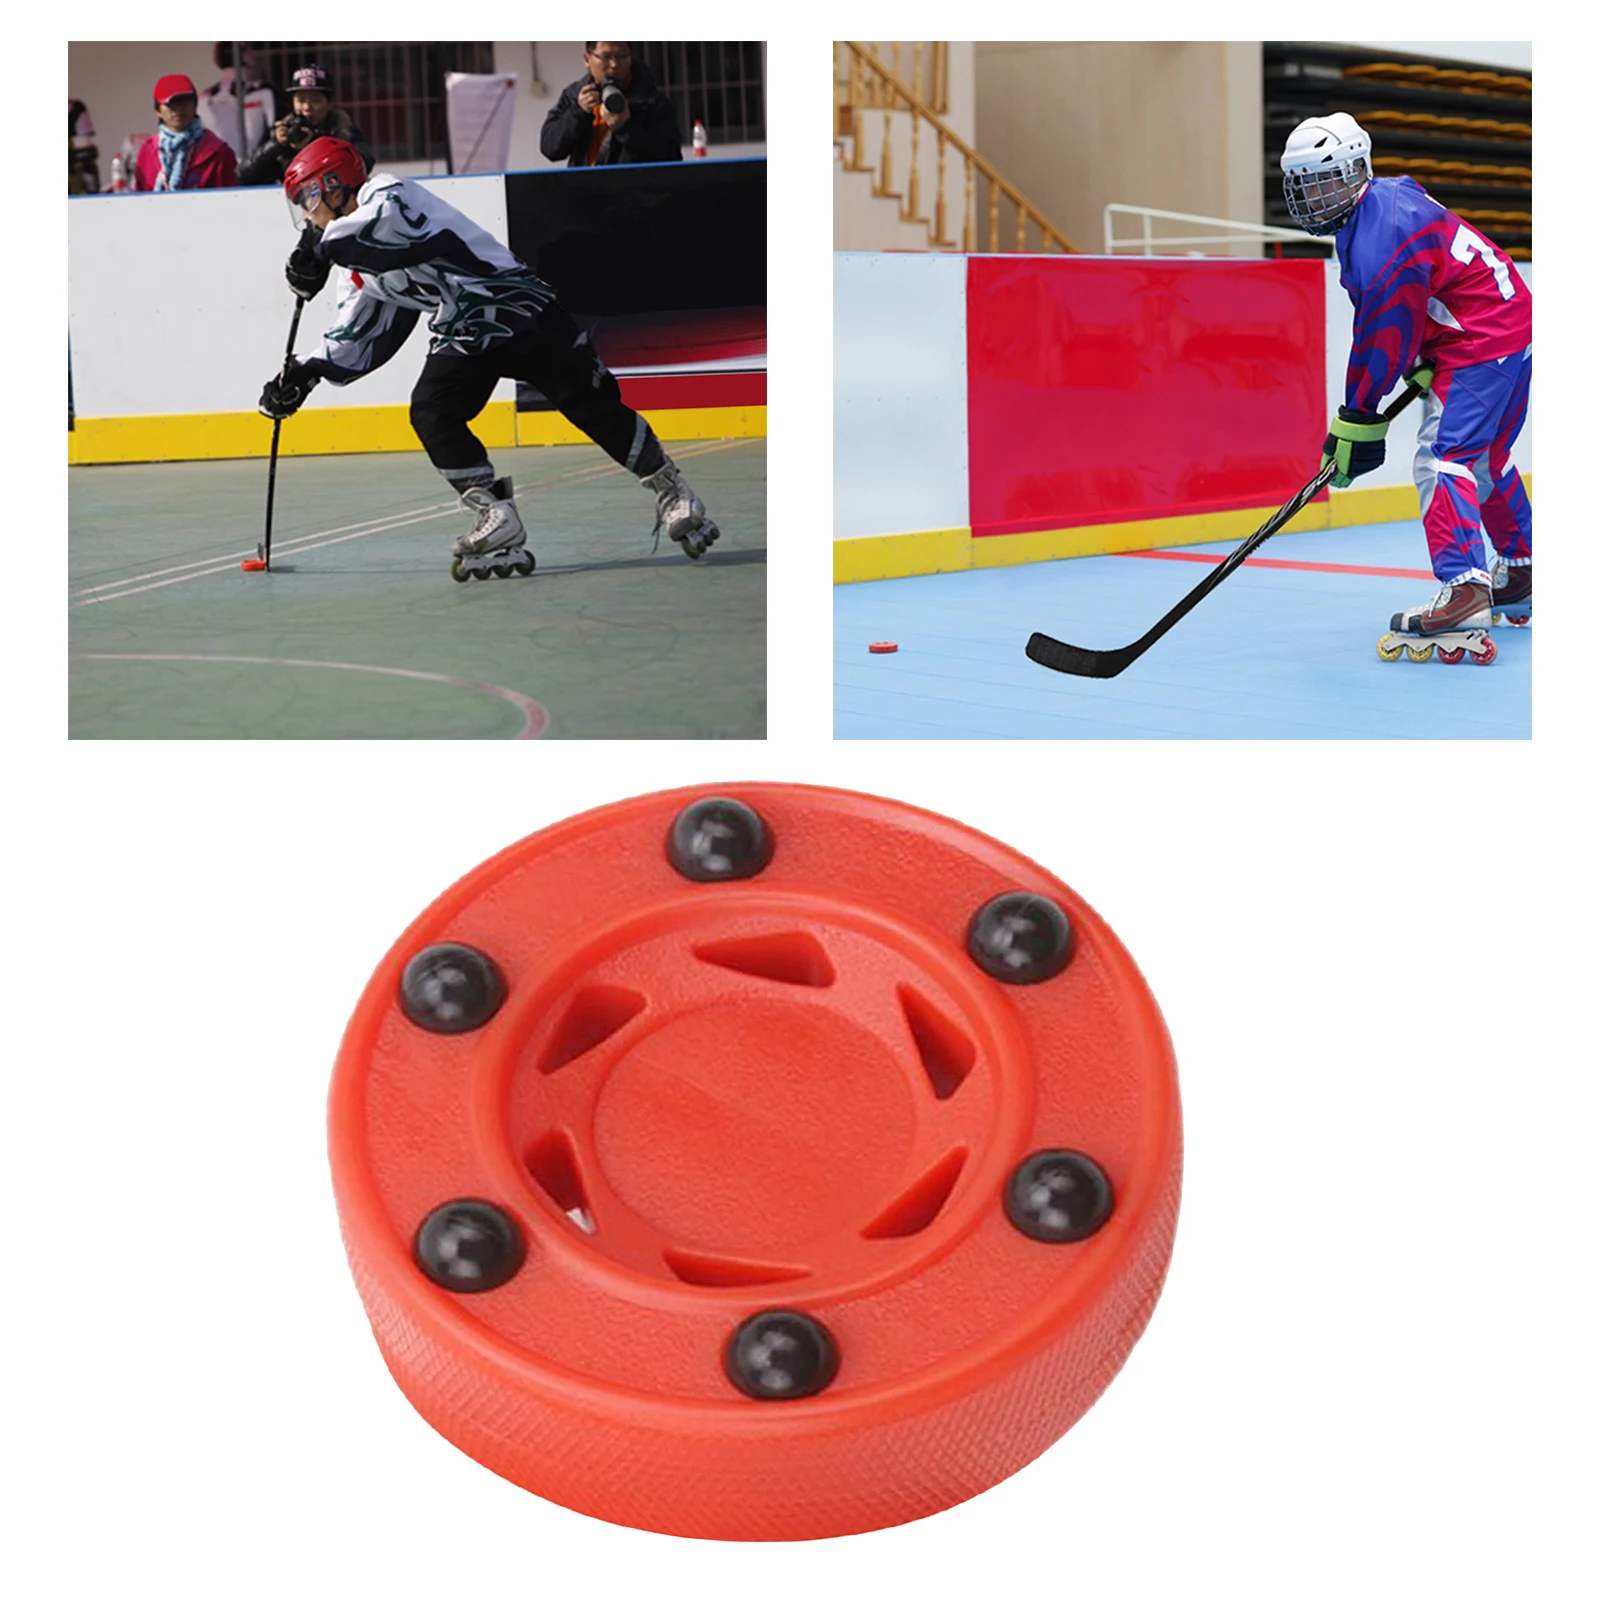 Professional Ice Hockey Pucks Roller Hockey Balls Classic Winter Sports Supplies for Street Hockey Practice Training Athletes